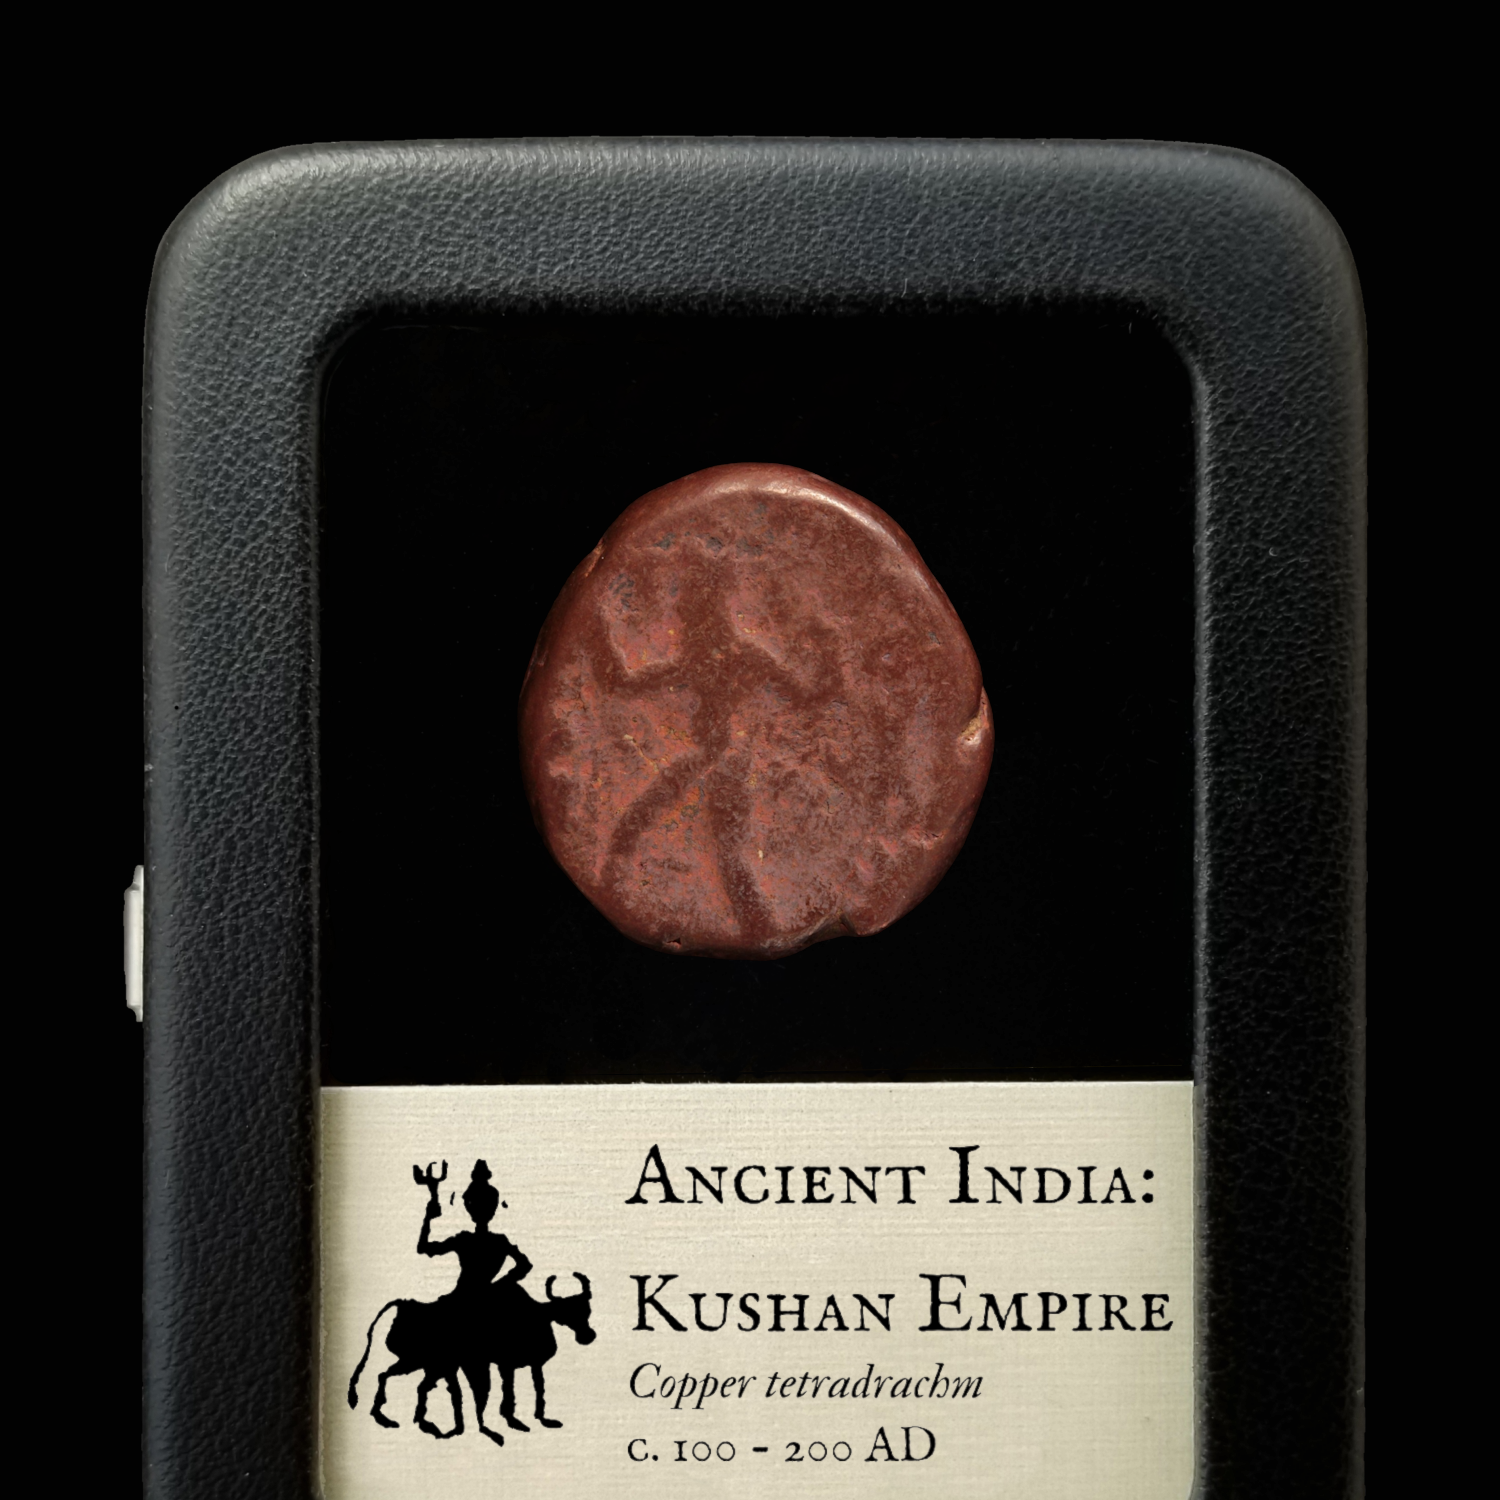 India, Kushan Empire, Copper Tetradrachm - c. 100 to 200 CE - Ancient India